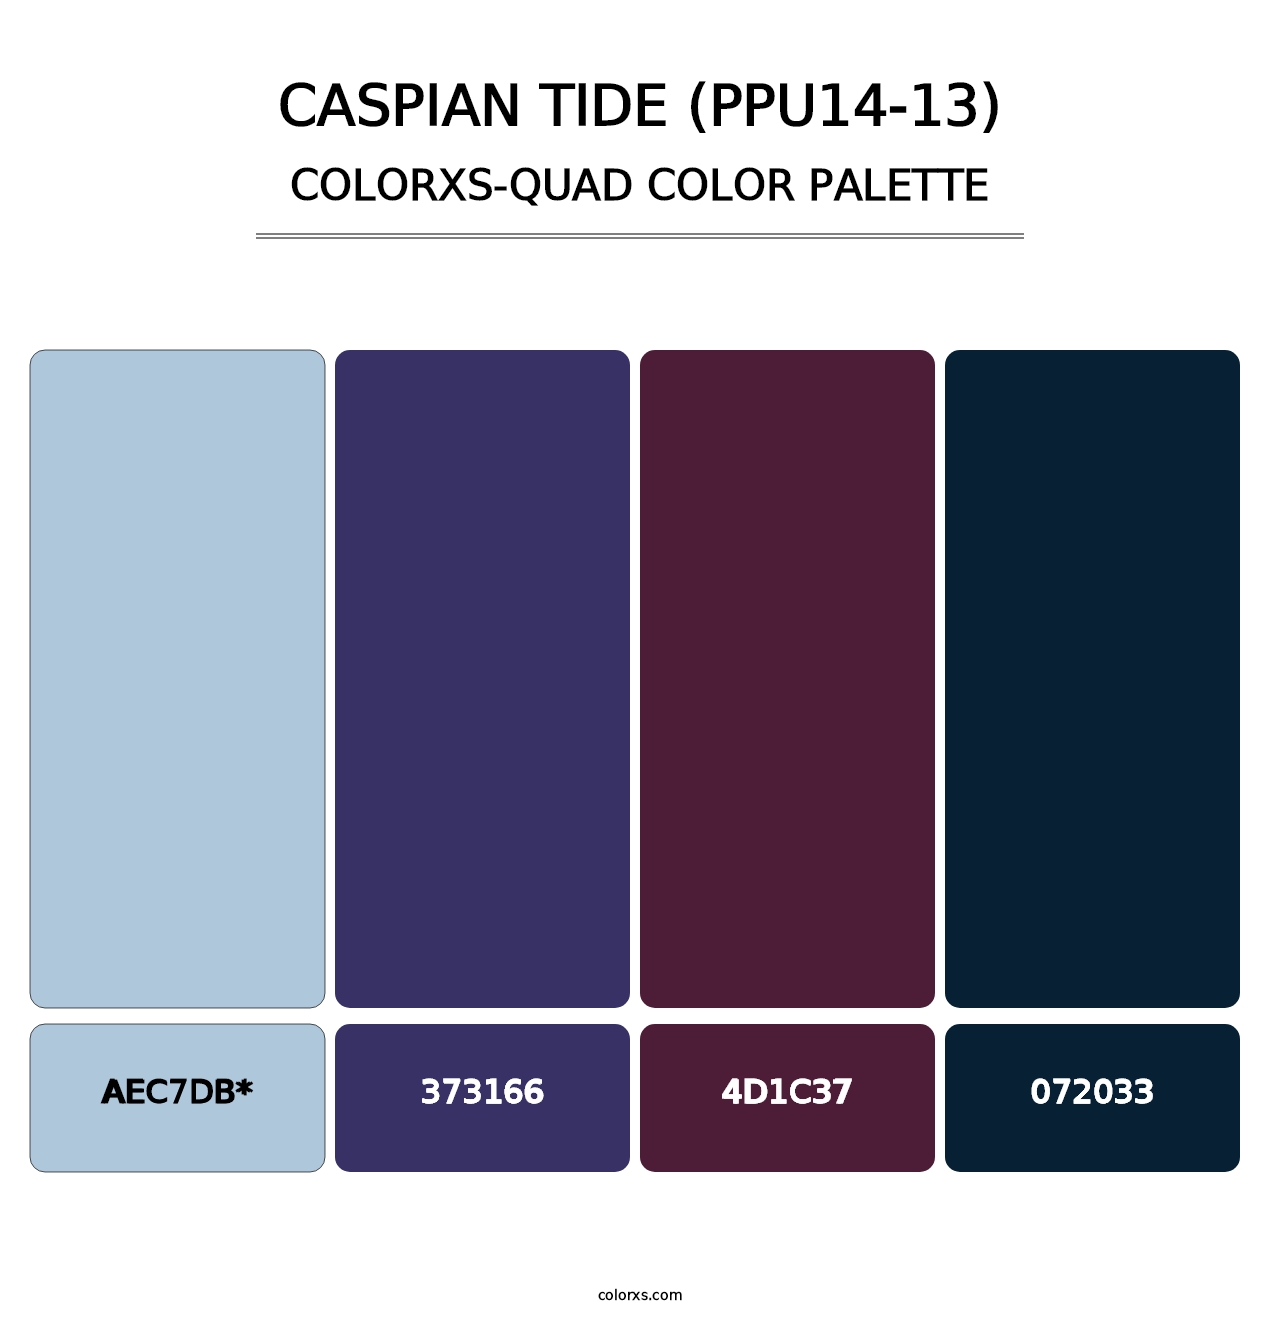 Caspian Tide (PPU14-13) - Colorxs Quad Palette